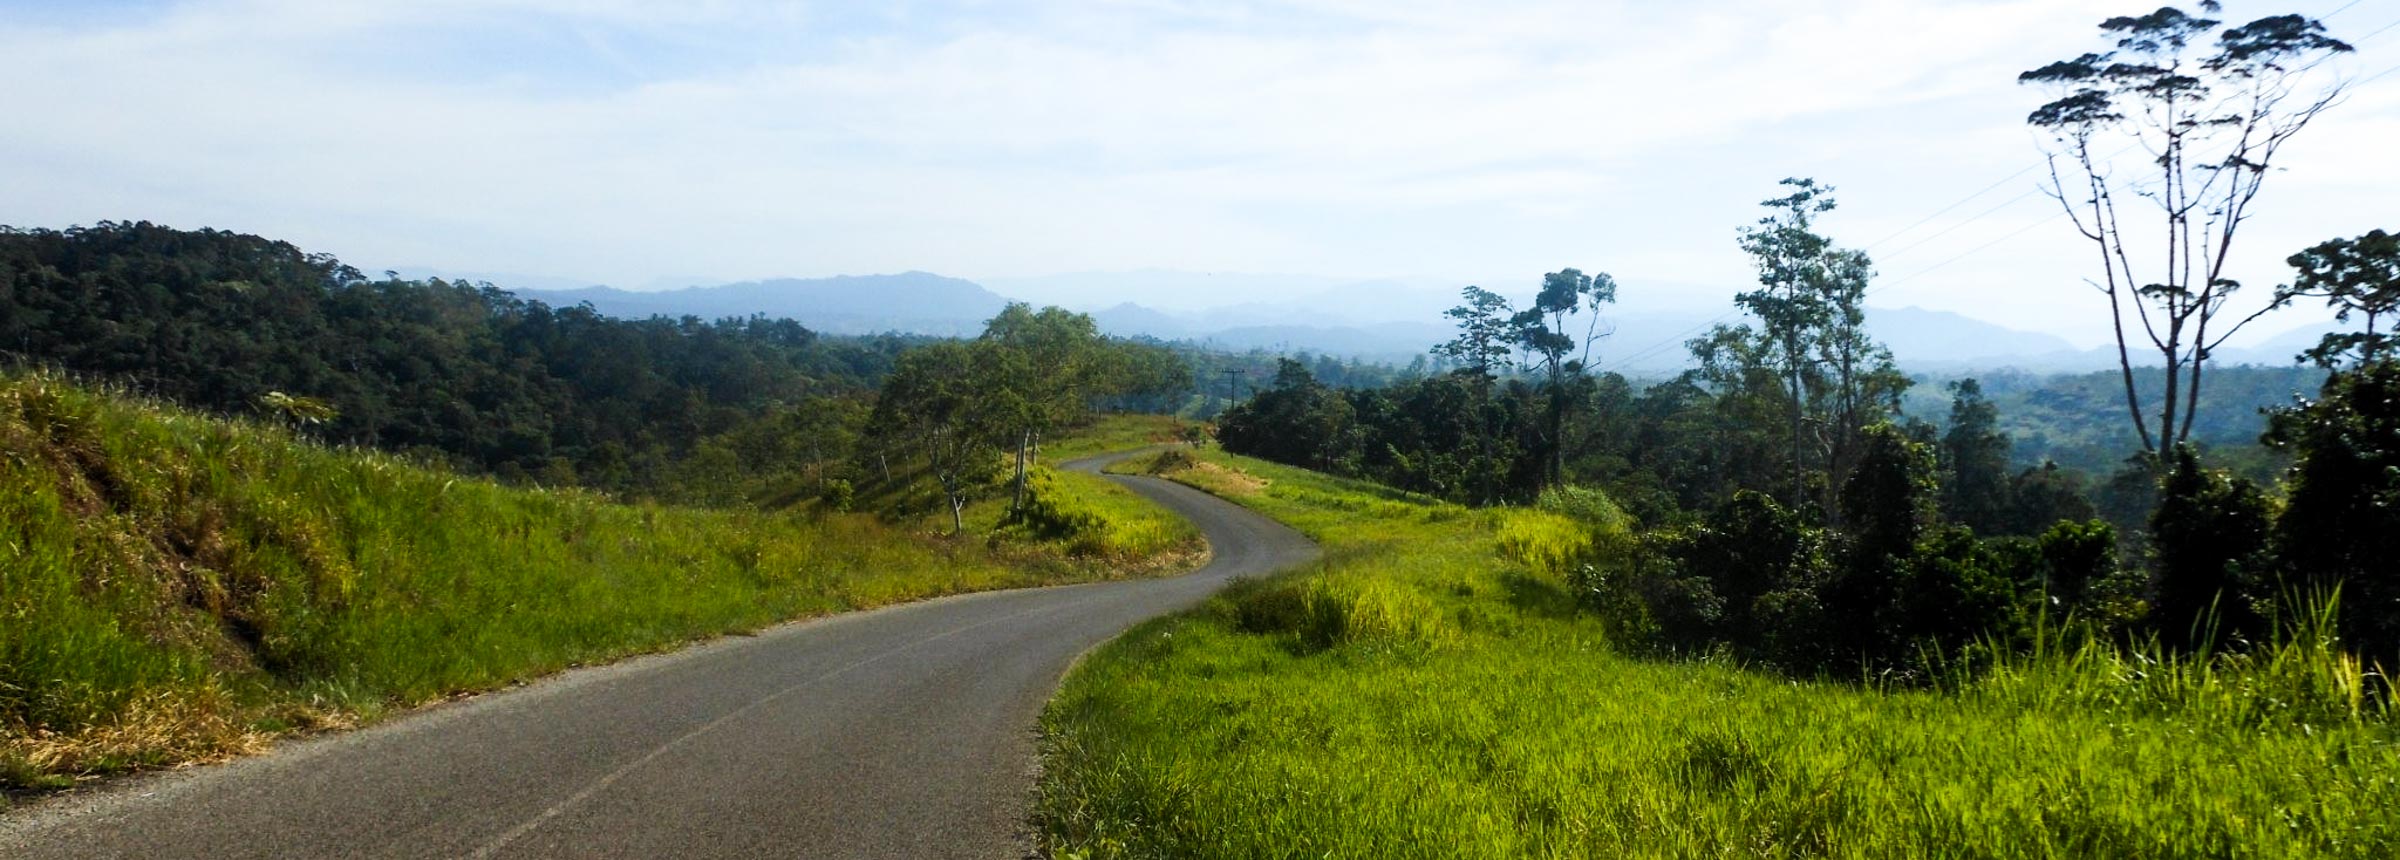 papua new guinea landscape